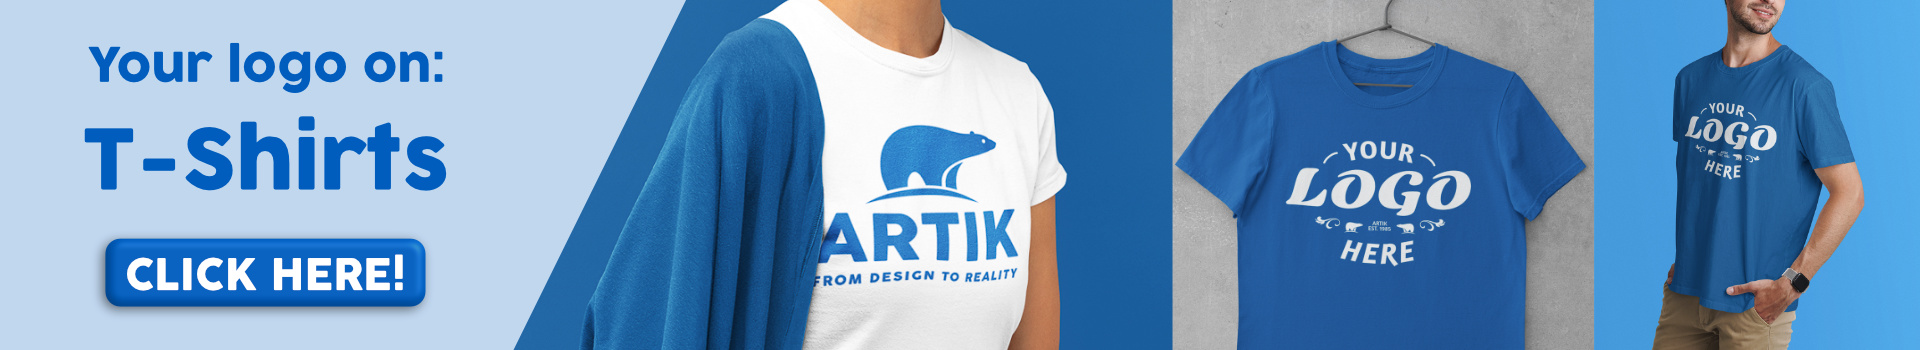 Custom T-Shirts & Promotional Products | Artik